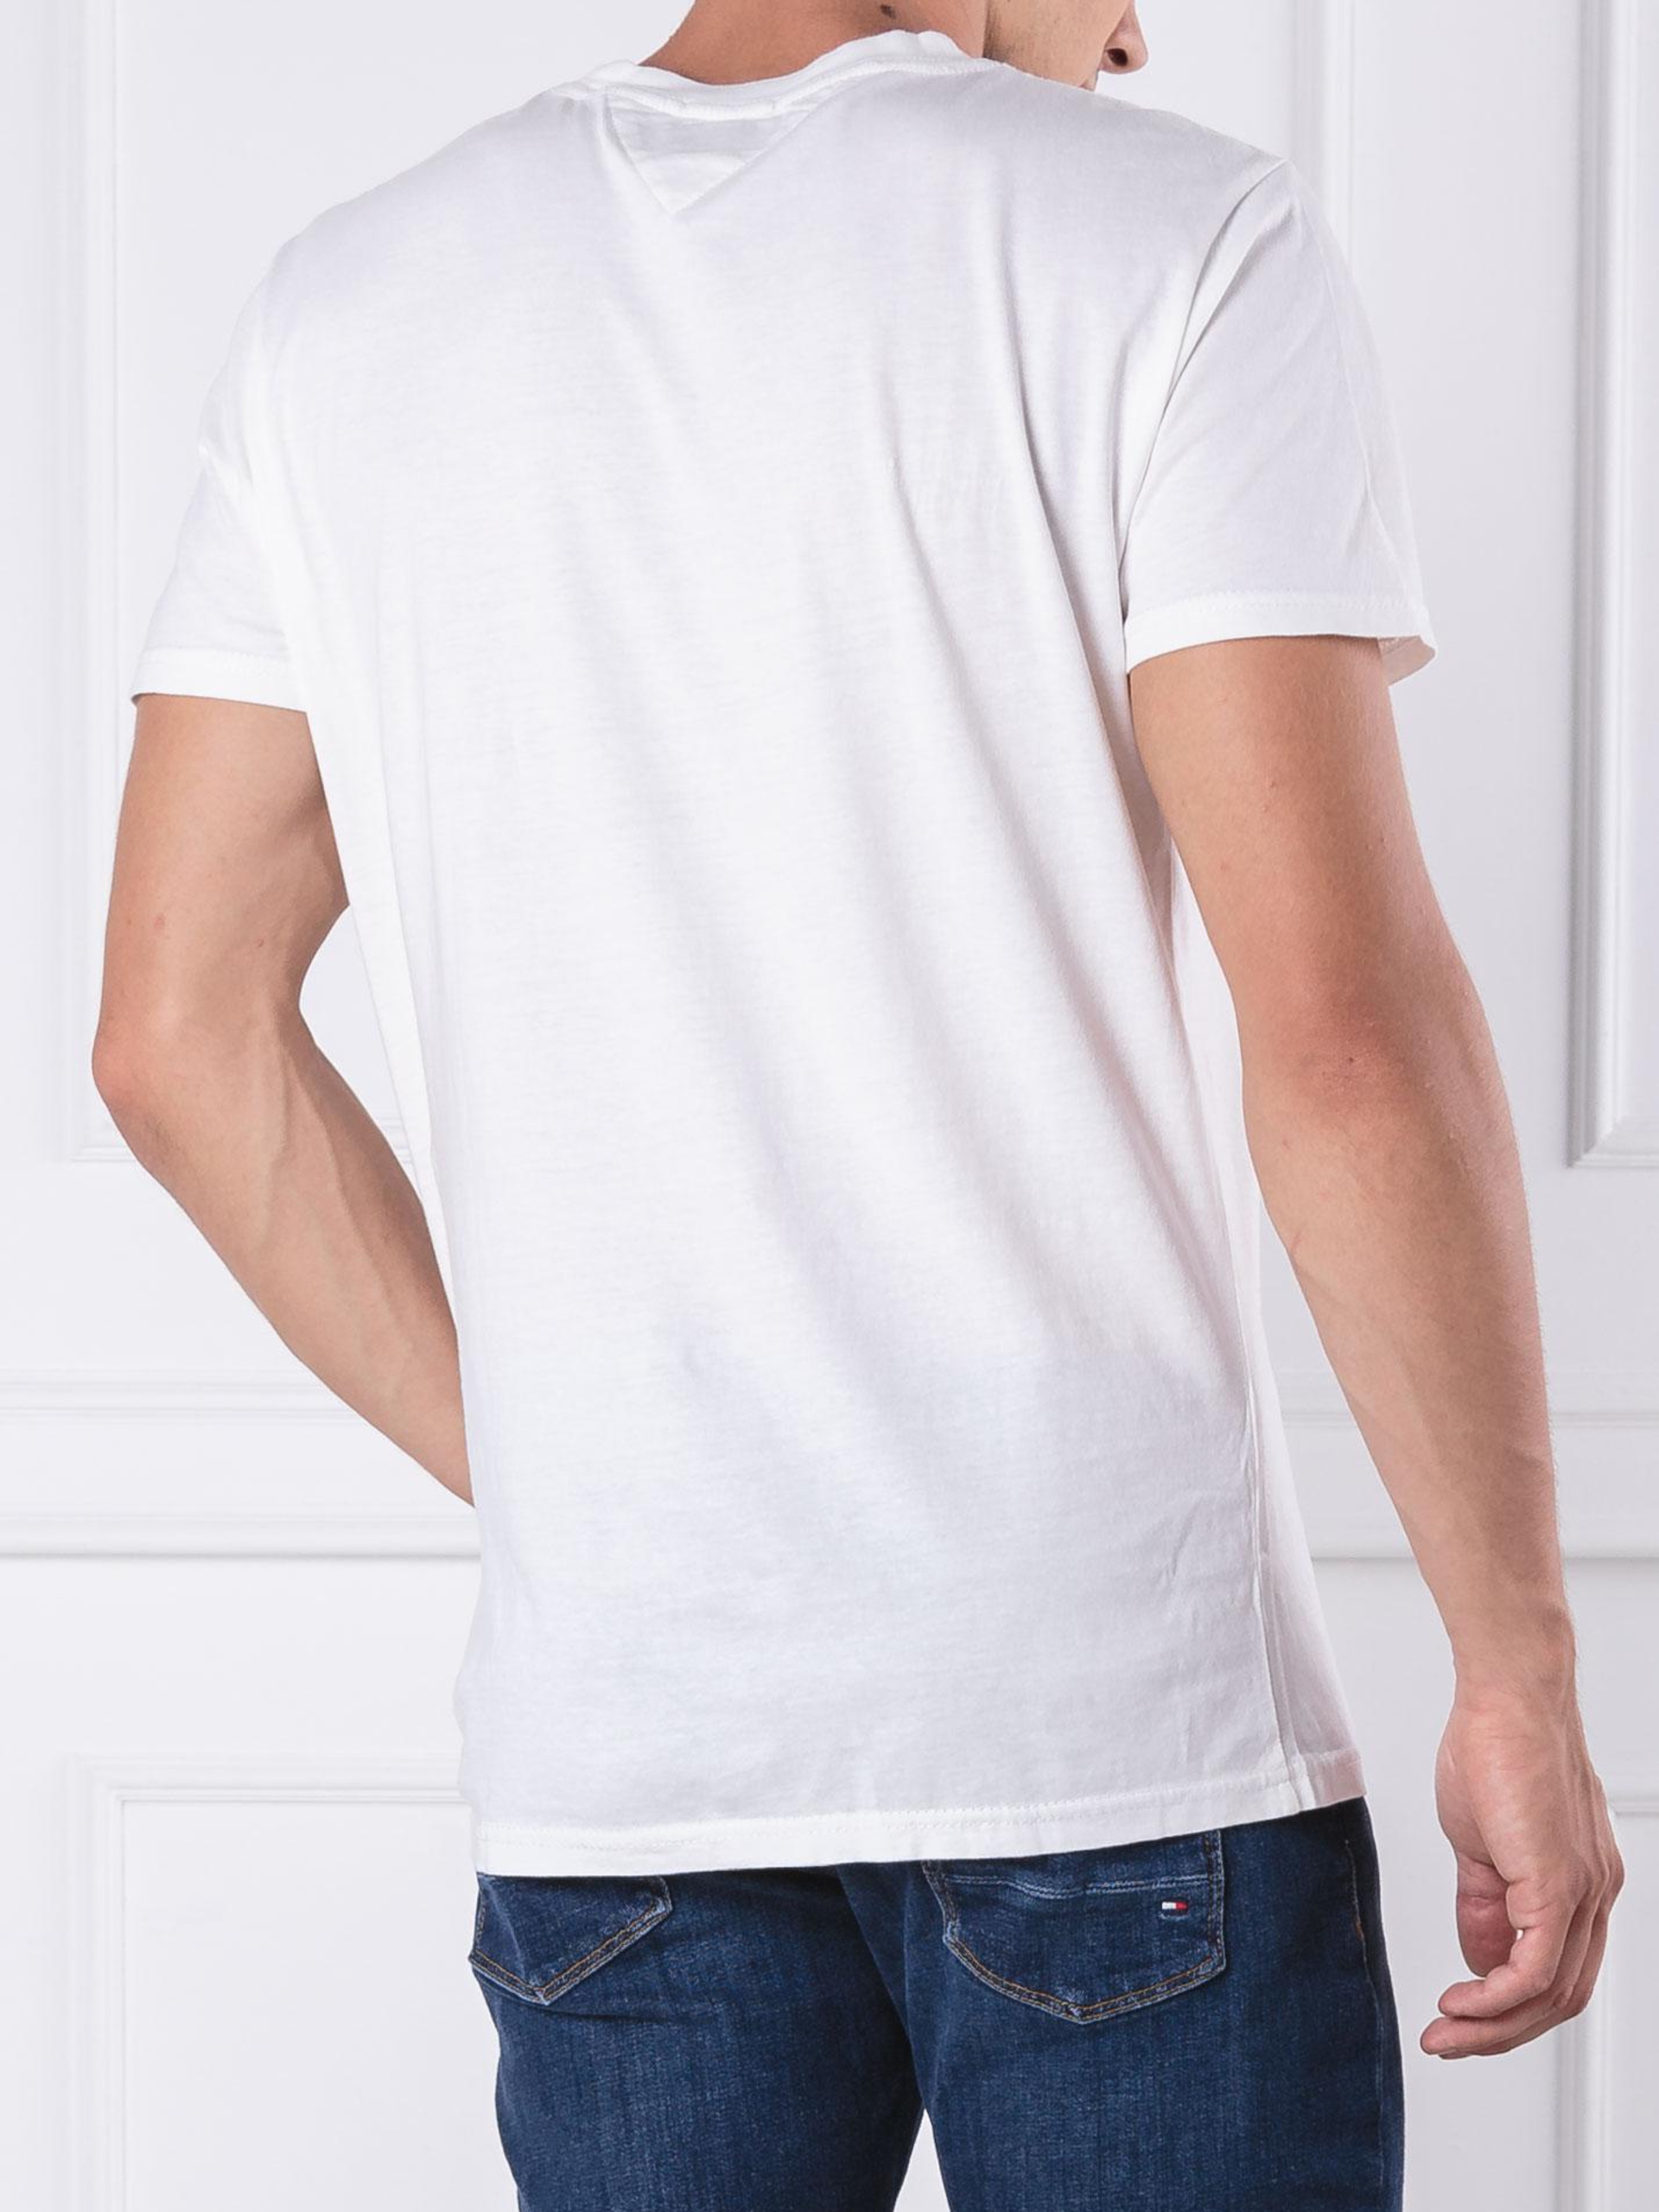 Tommy Hilfiger pánske biele tričko Essential - L (100)